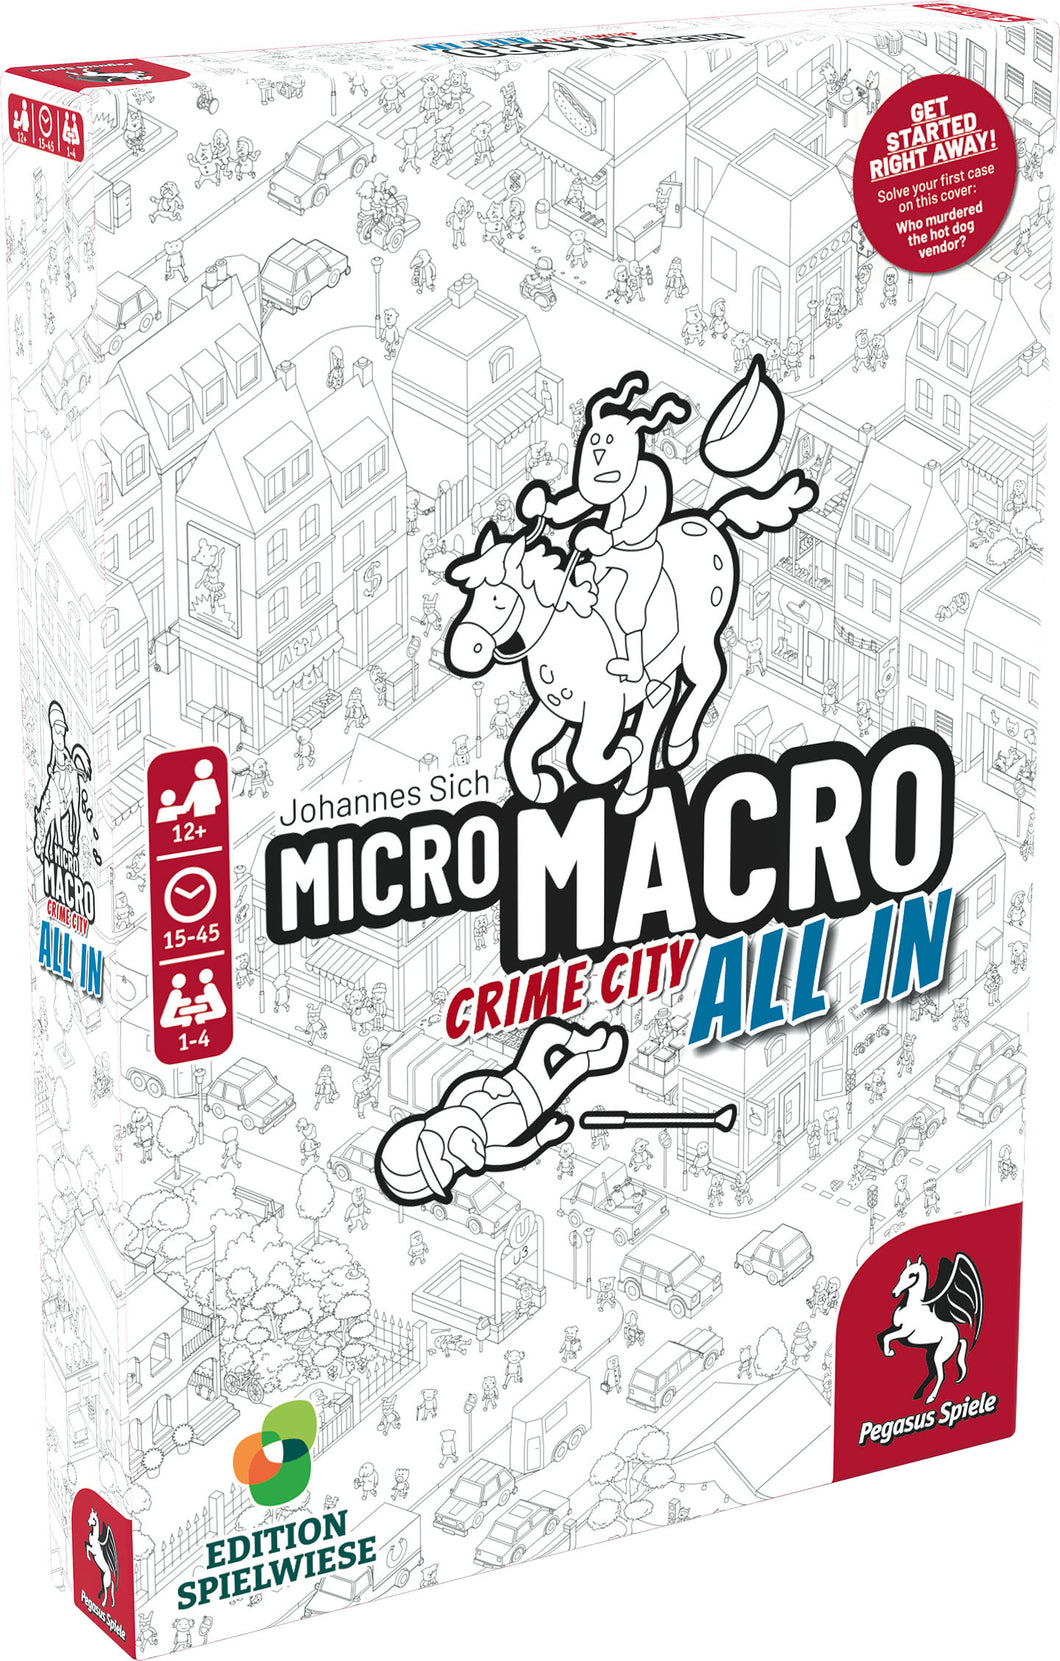 MicroMacro Crime City 3 All In